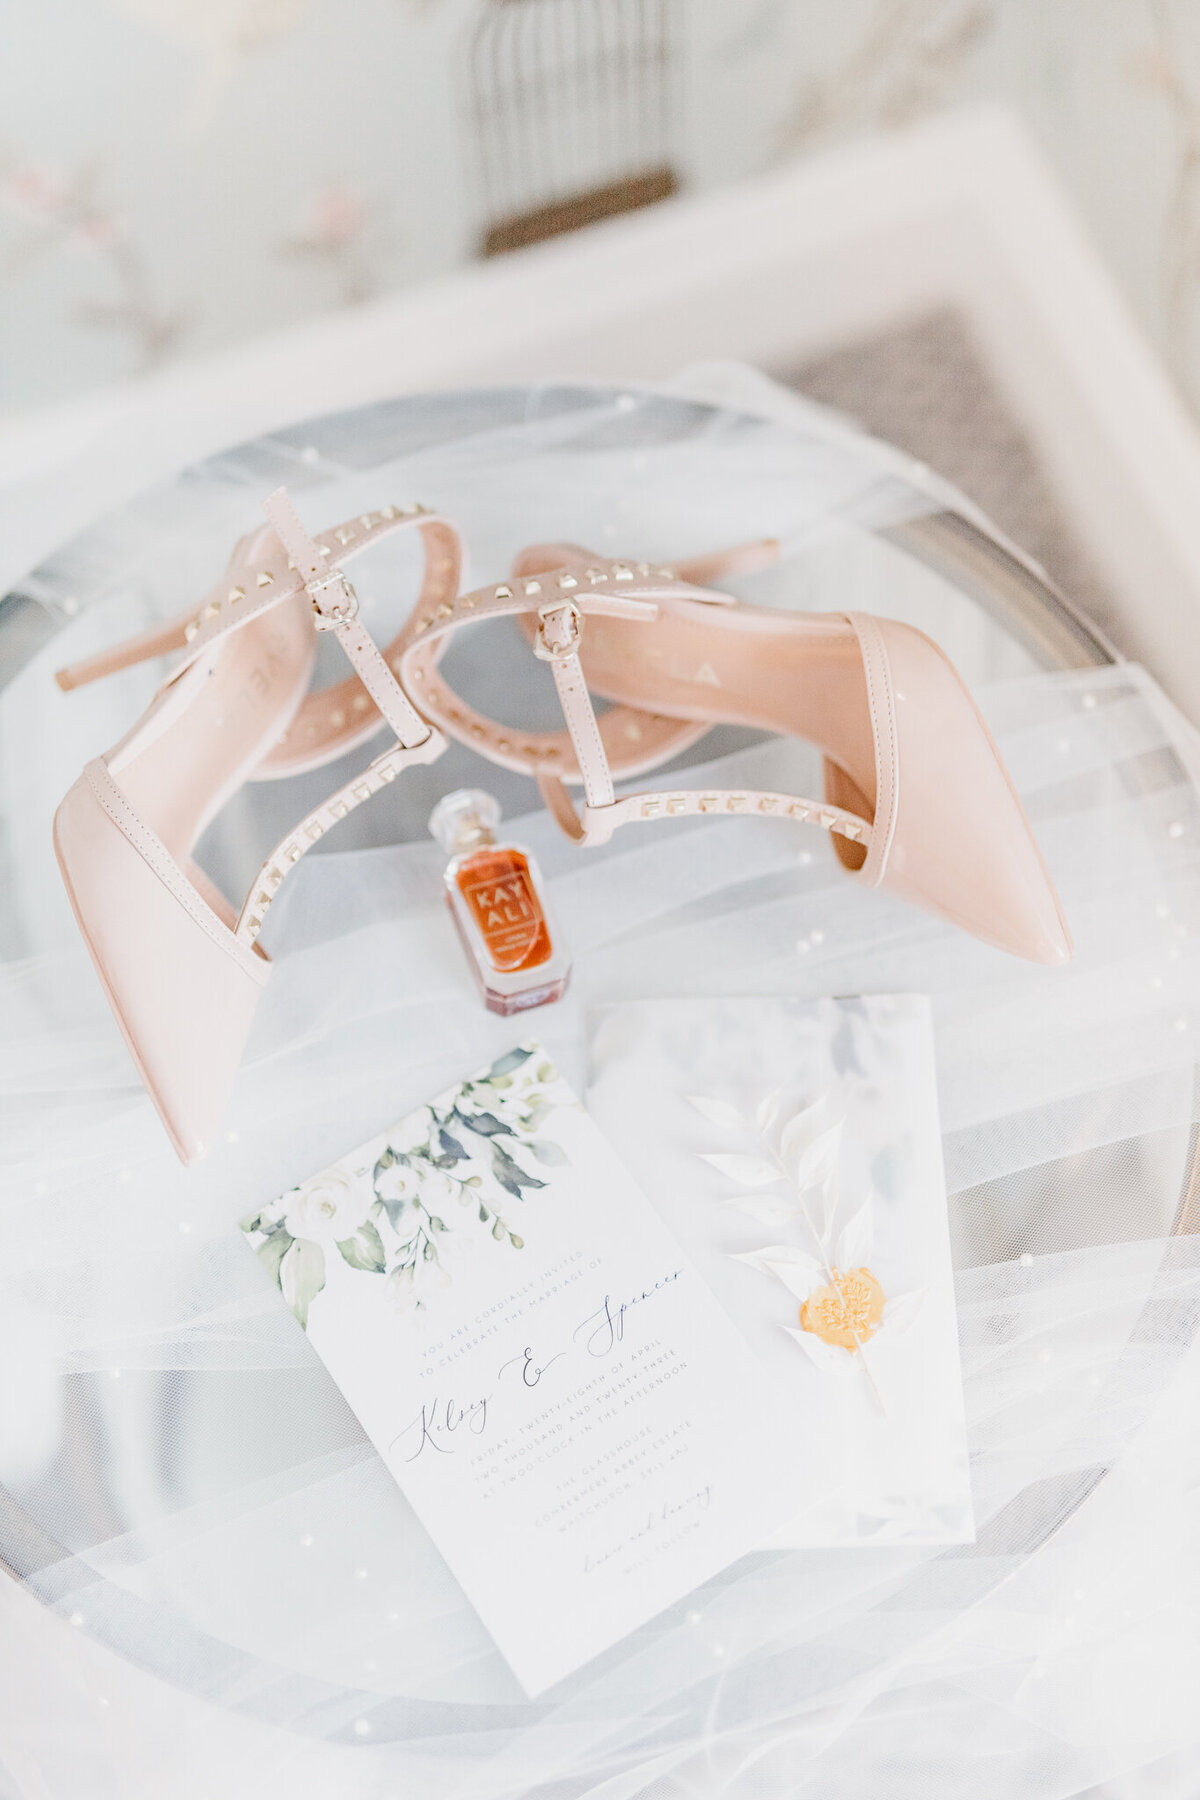 Bridal shoes, perfume, wedding invitation on a table